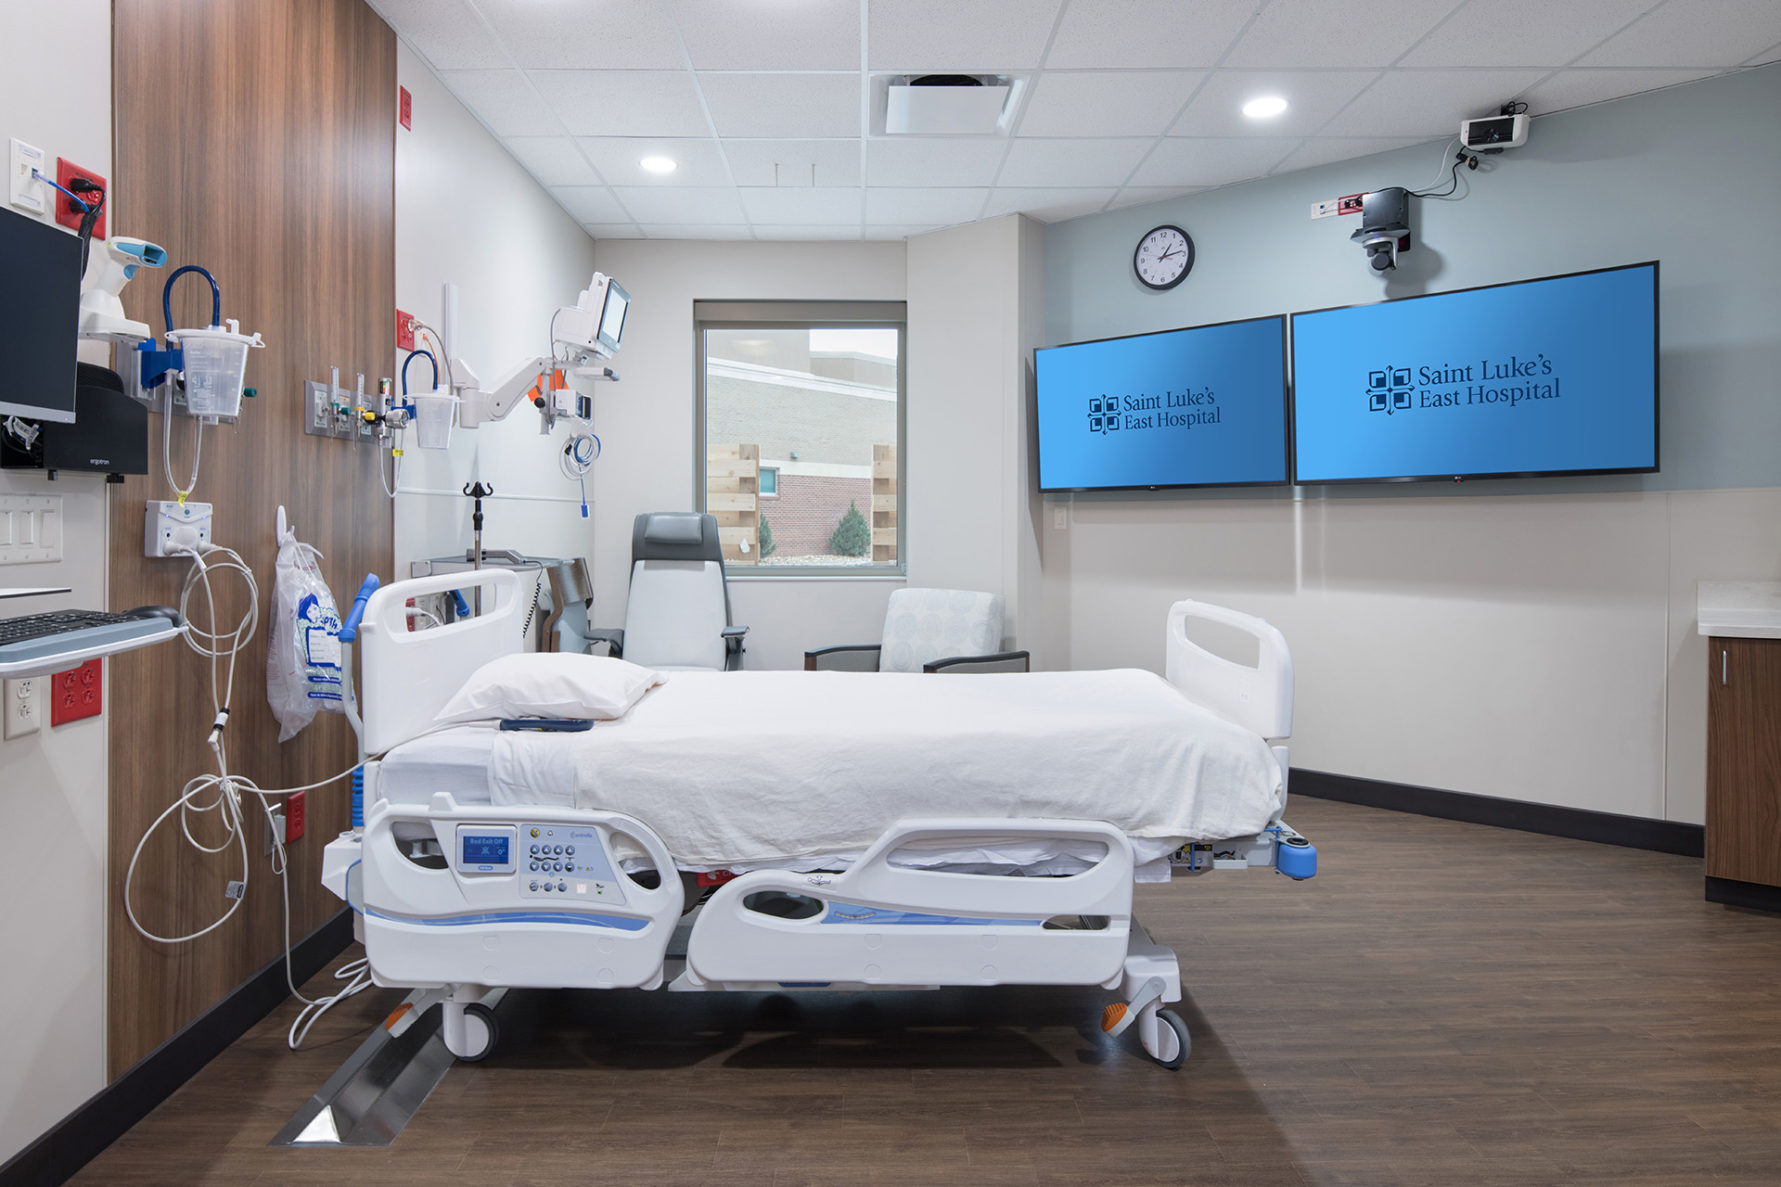 Hospital patient room built by McCownGordon Construction at Saint Luke's East Flex Capacity